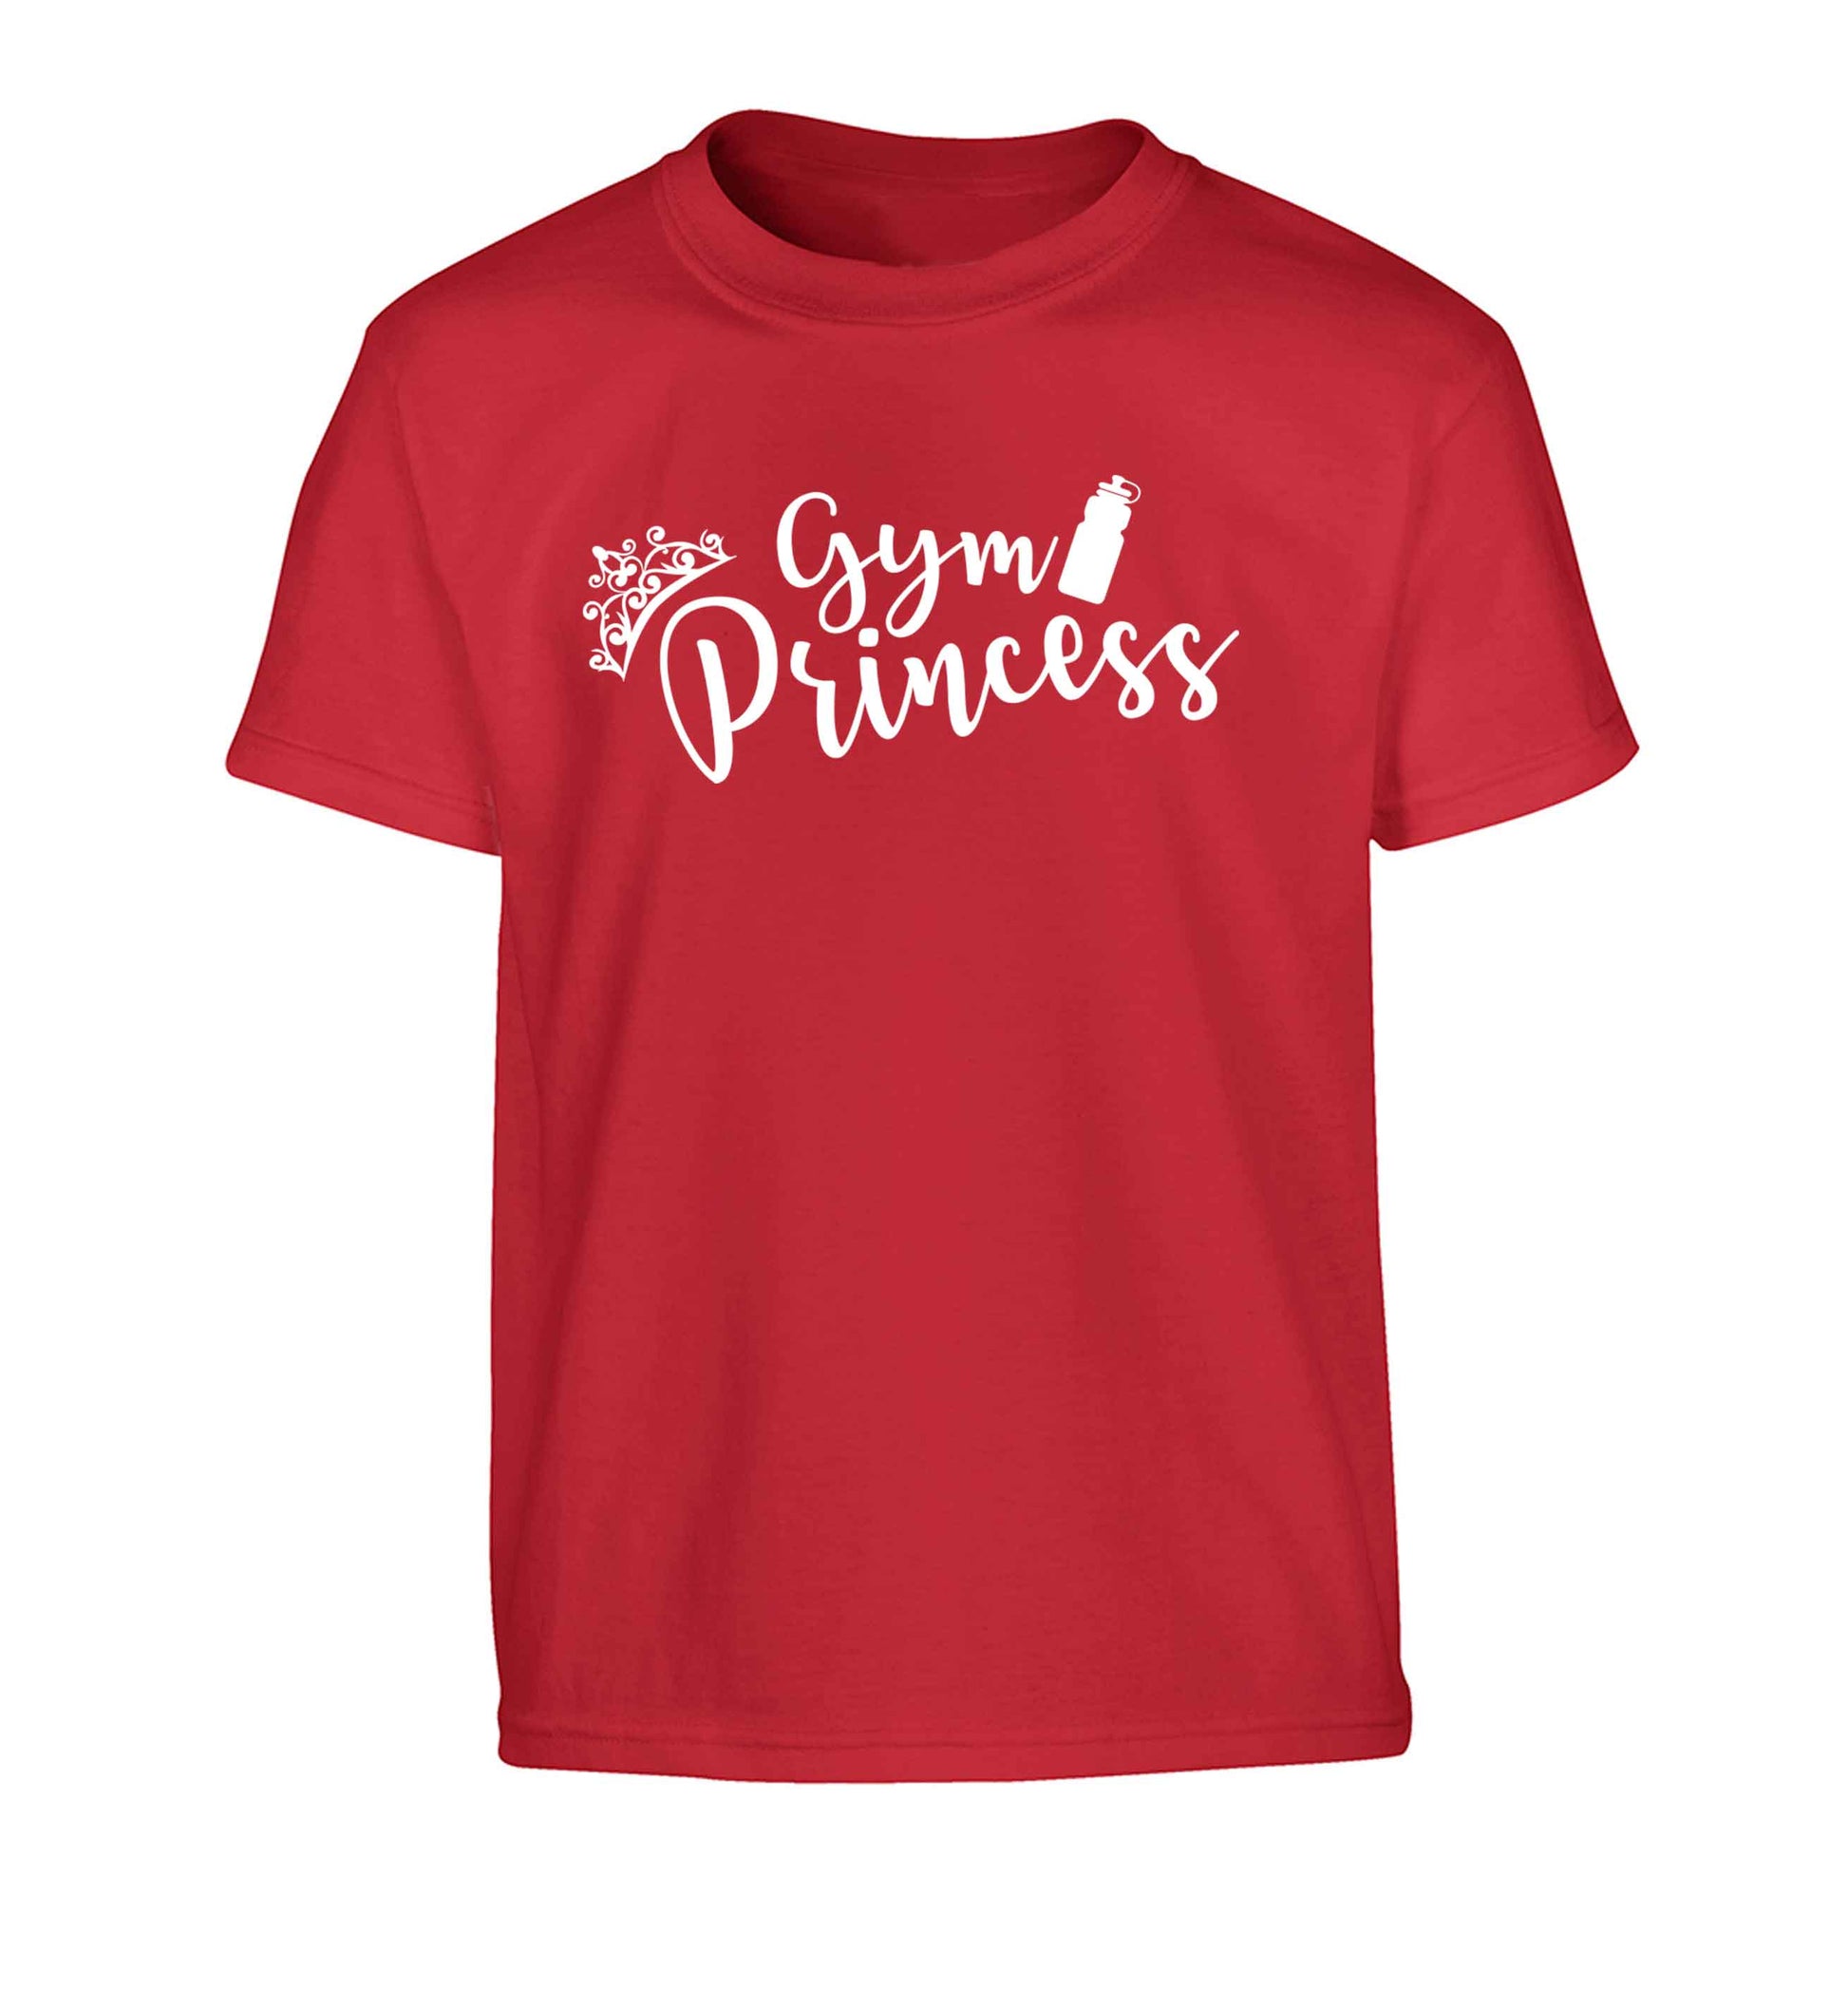 Gym princess Children's red Tshirt 12-13 Years